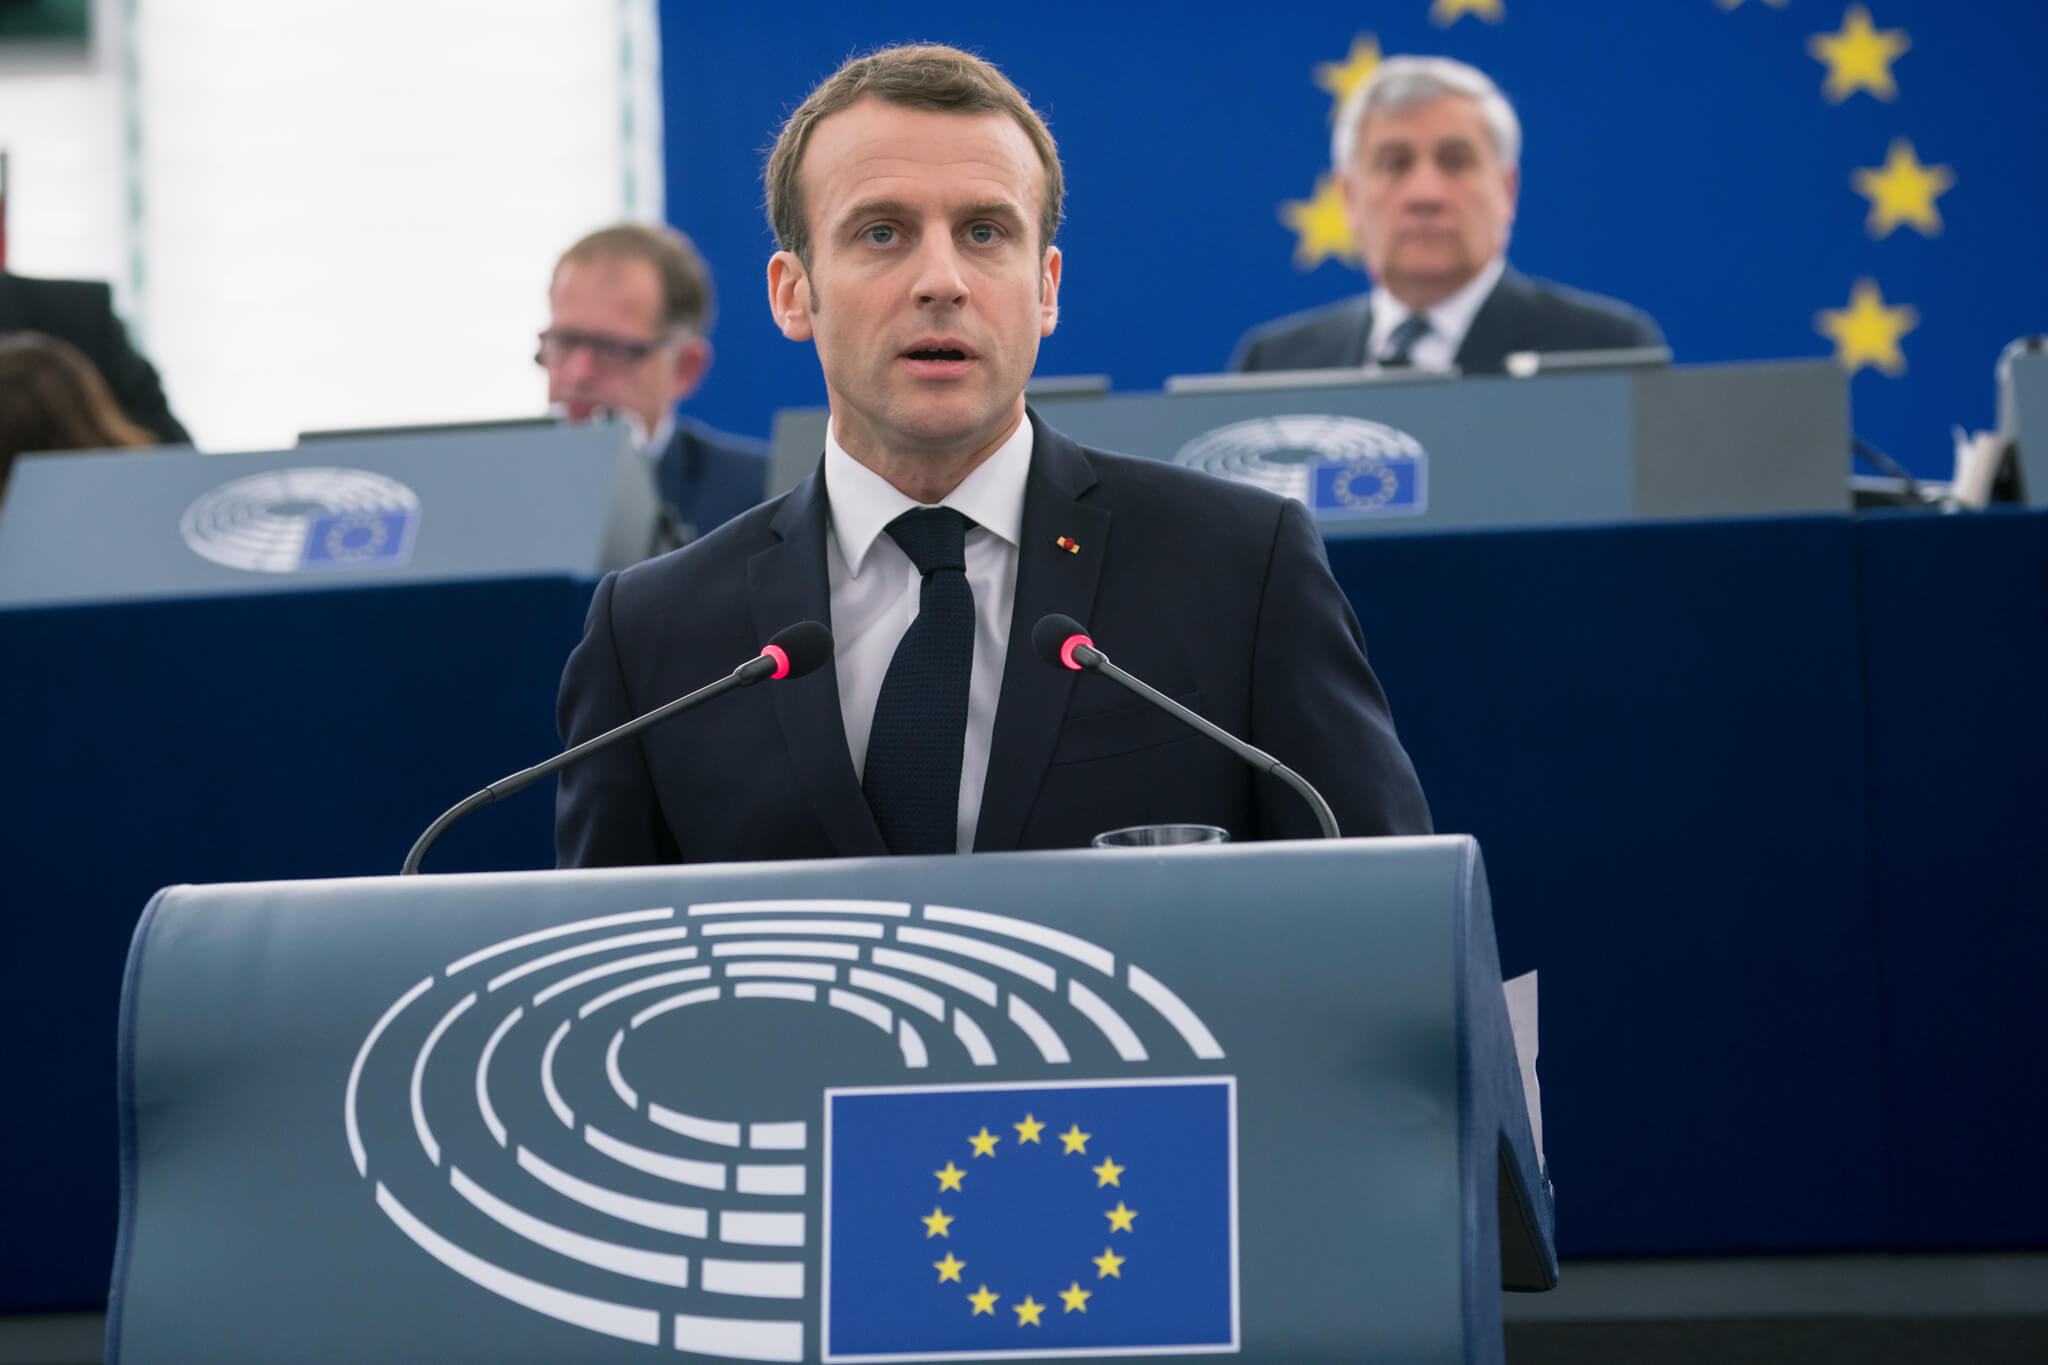 Schout-Emmanuel Macron debates the future of Europe with MEPs-17Apr2018-European Parliament Flickr